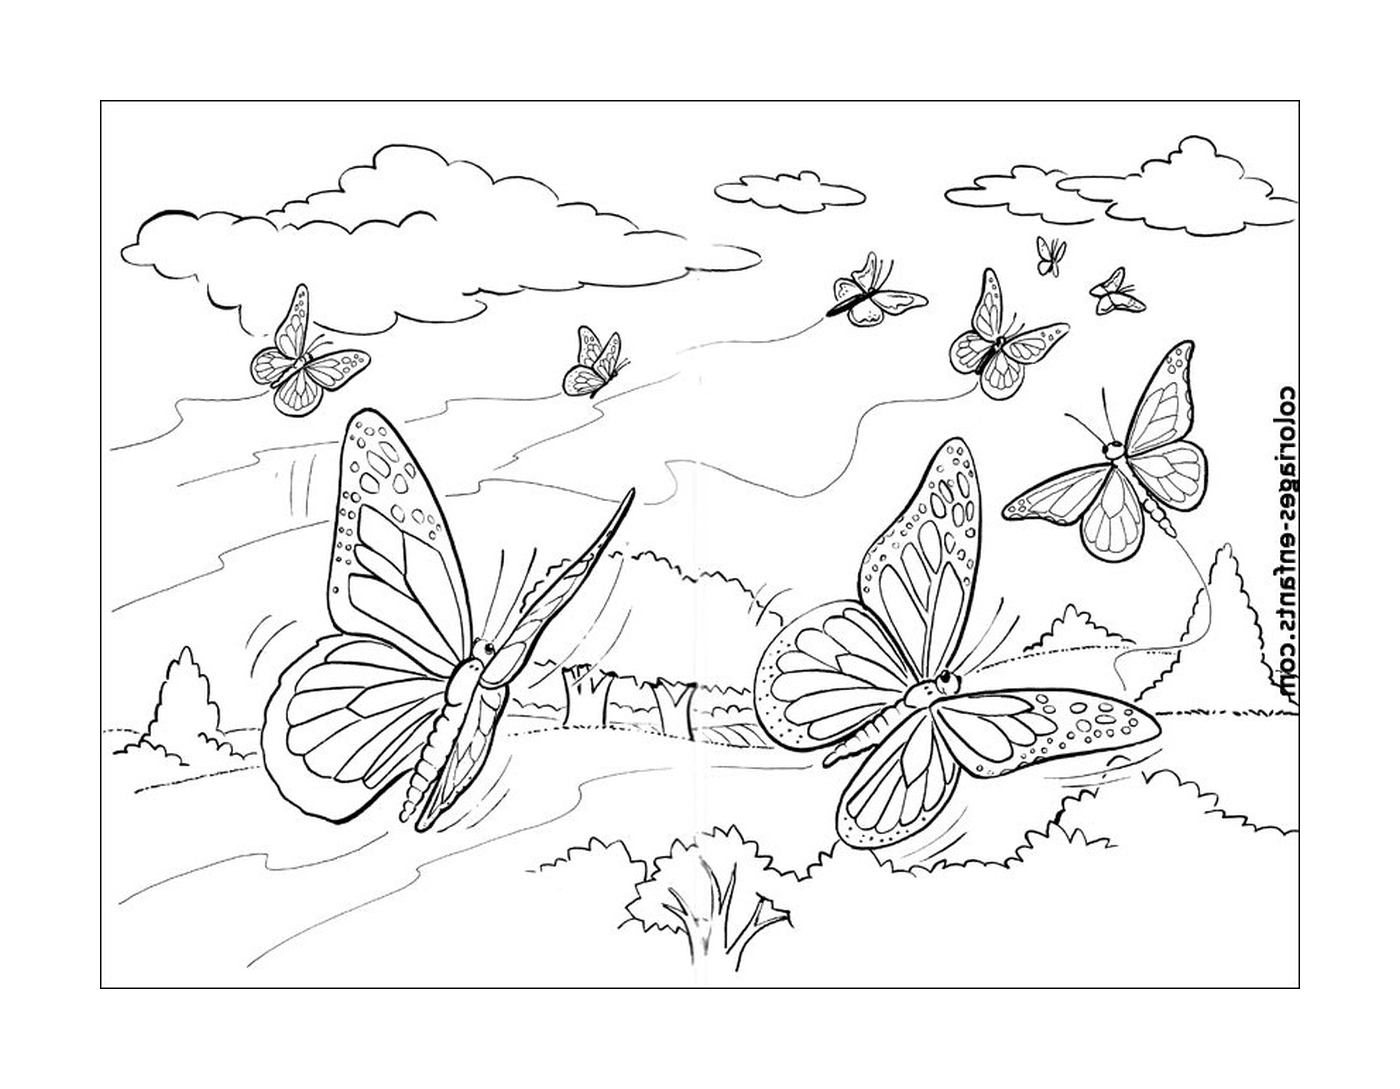  Schmetterlinge im Flug 